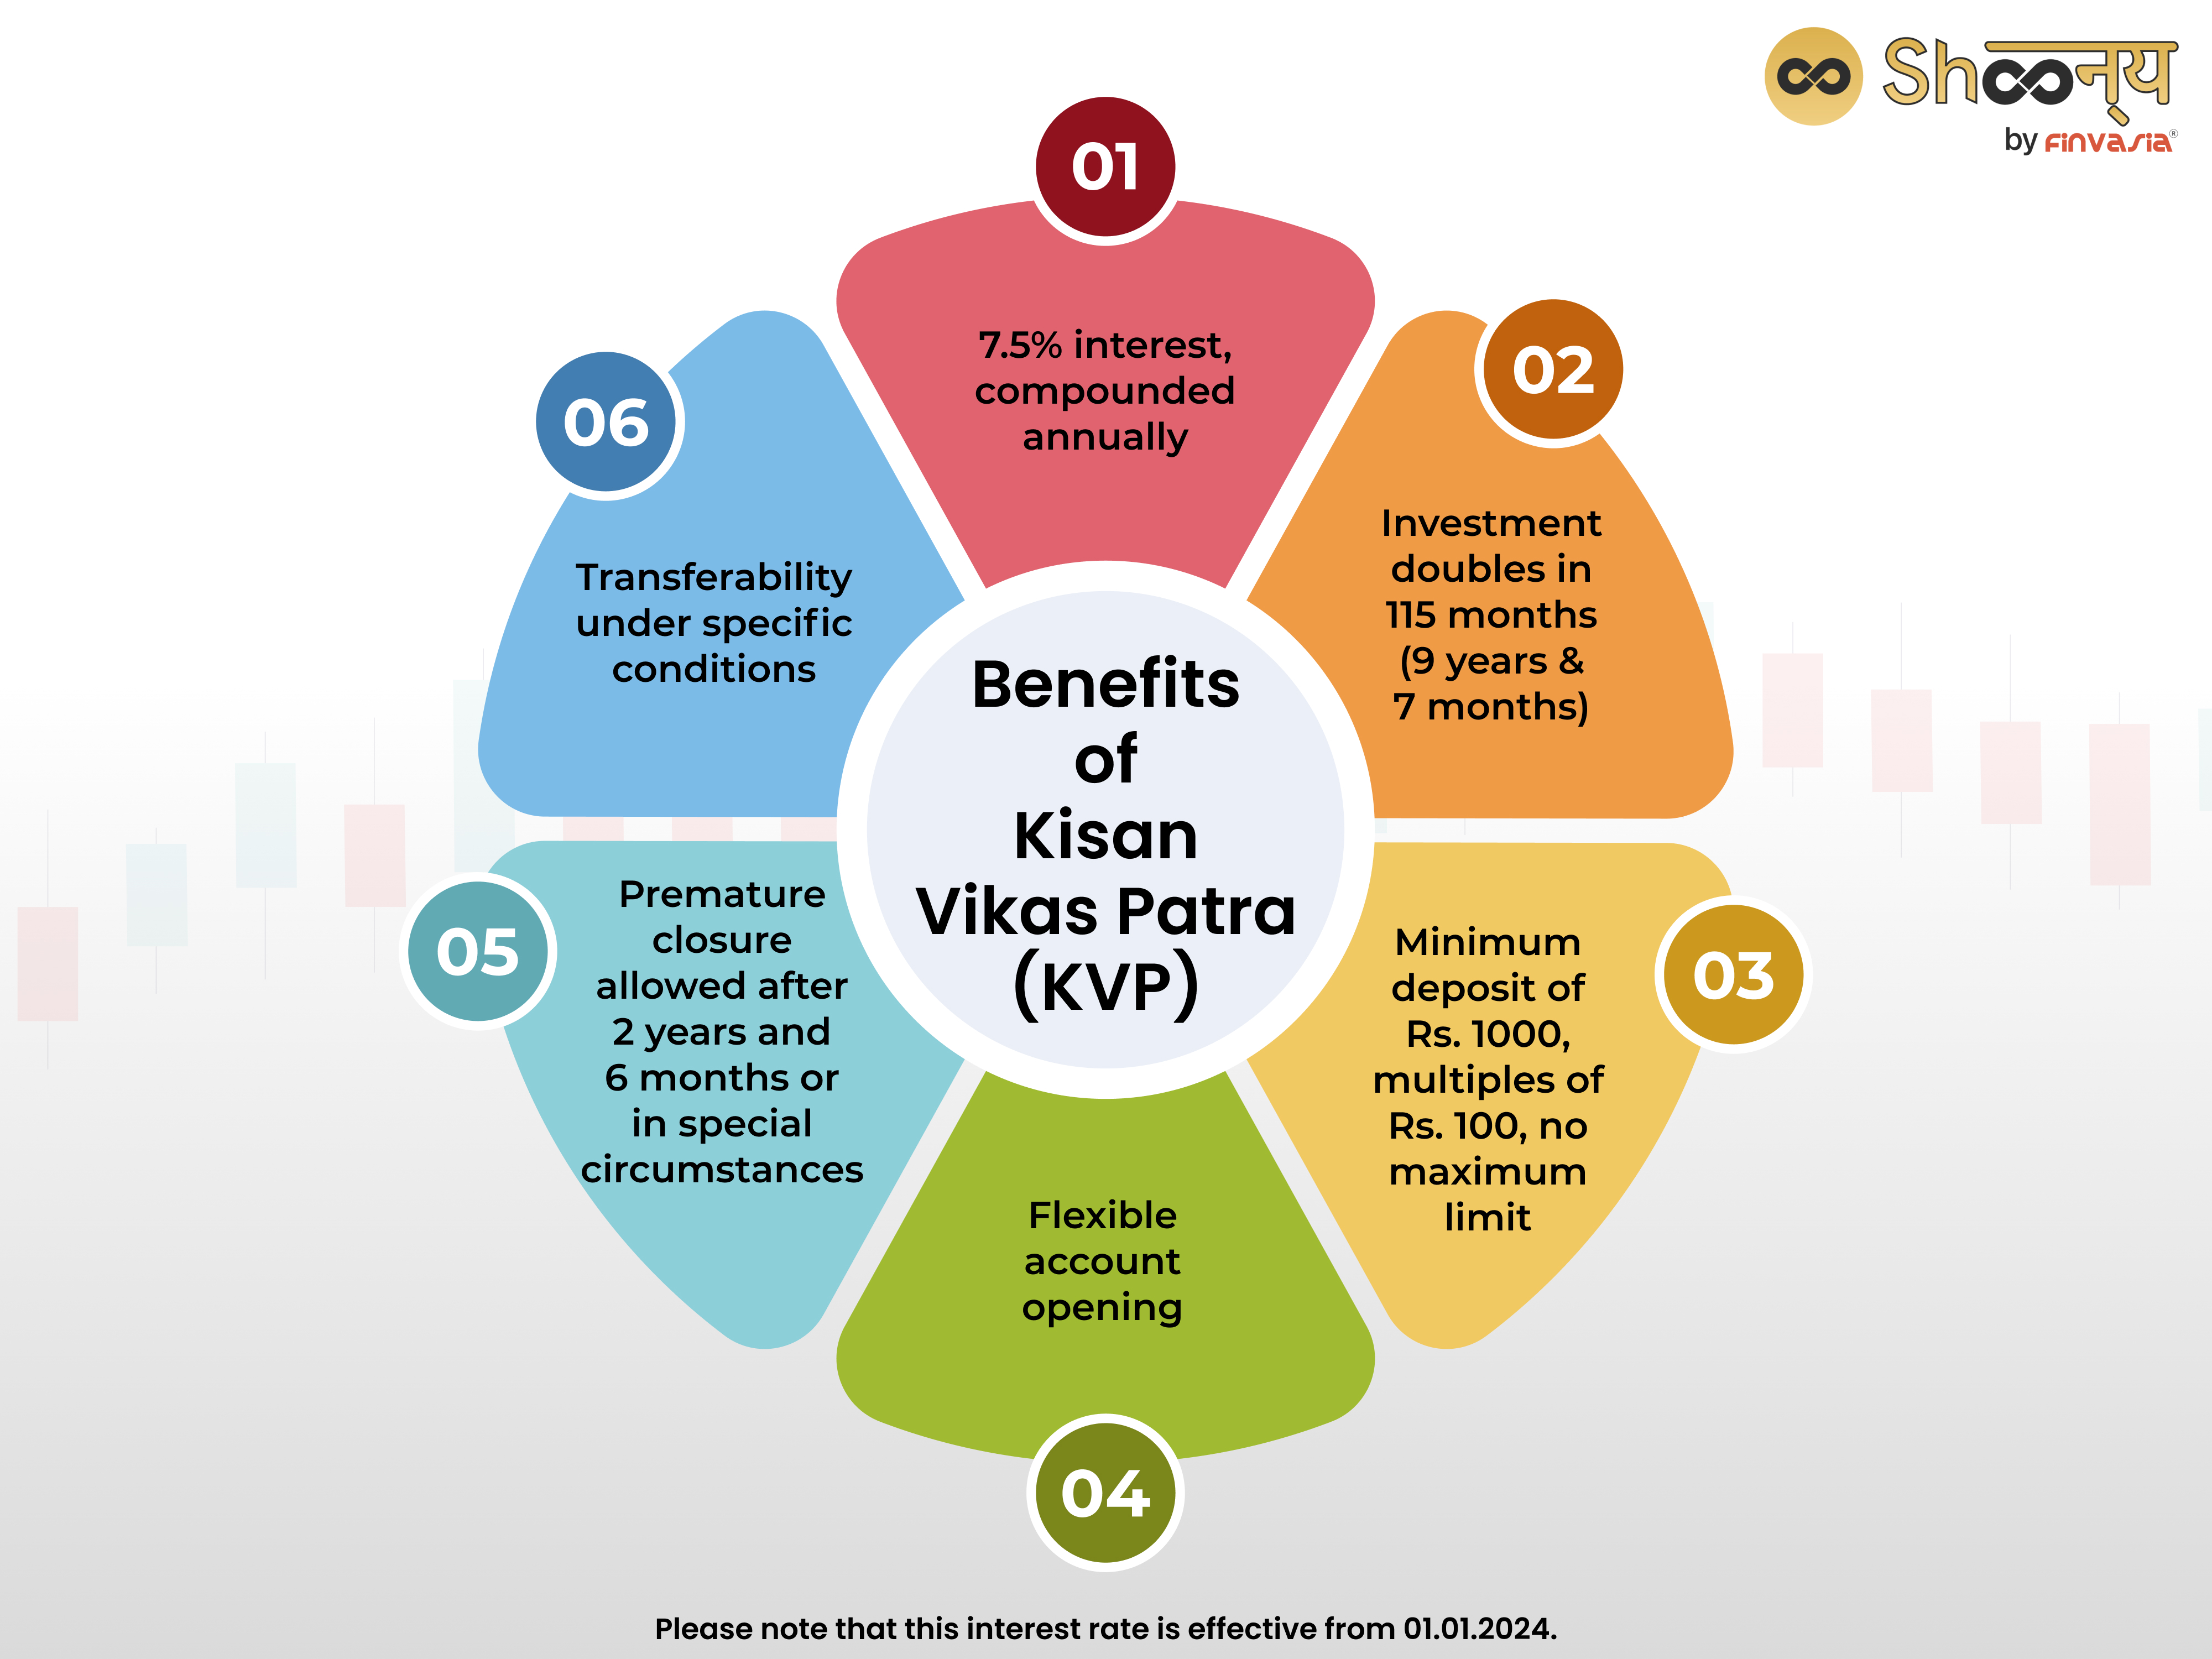 Benefits of Kisan Vikas Patra (KVP)
